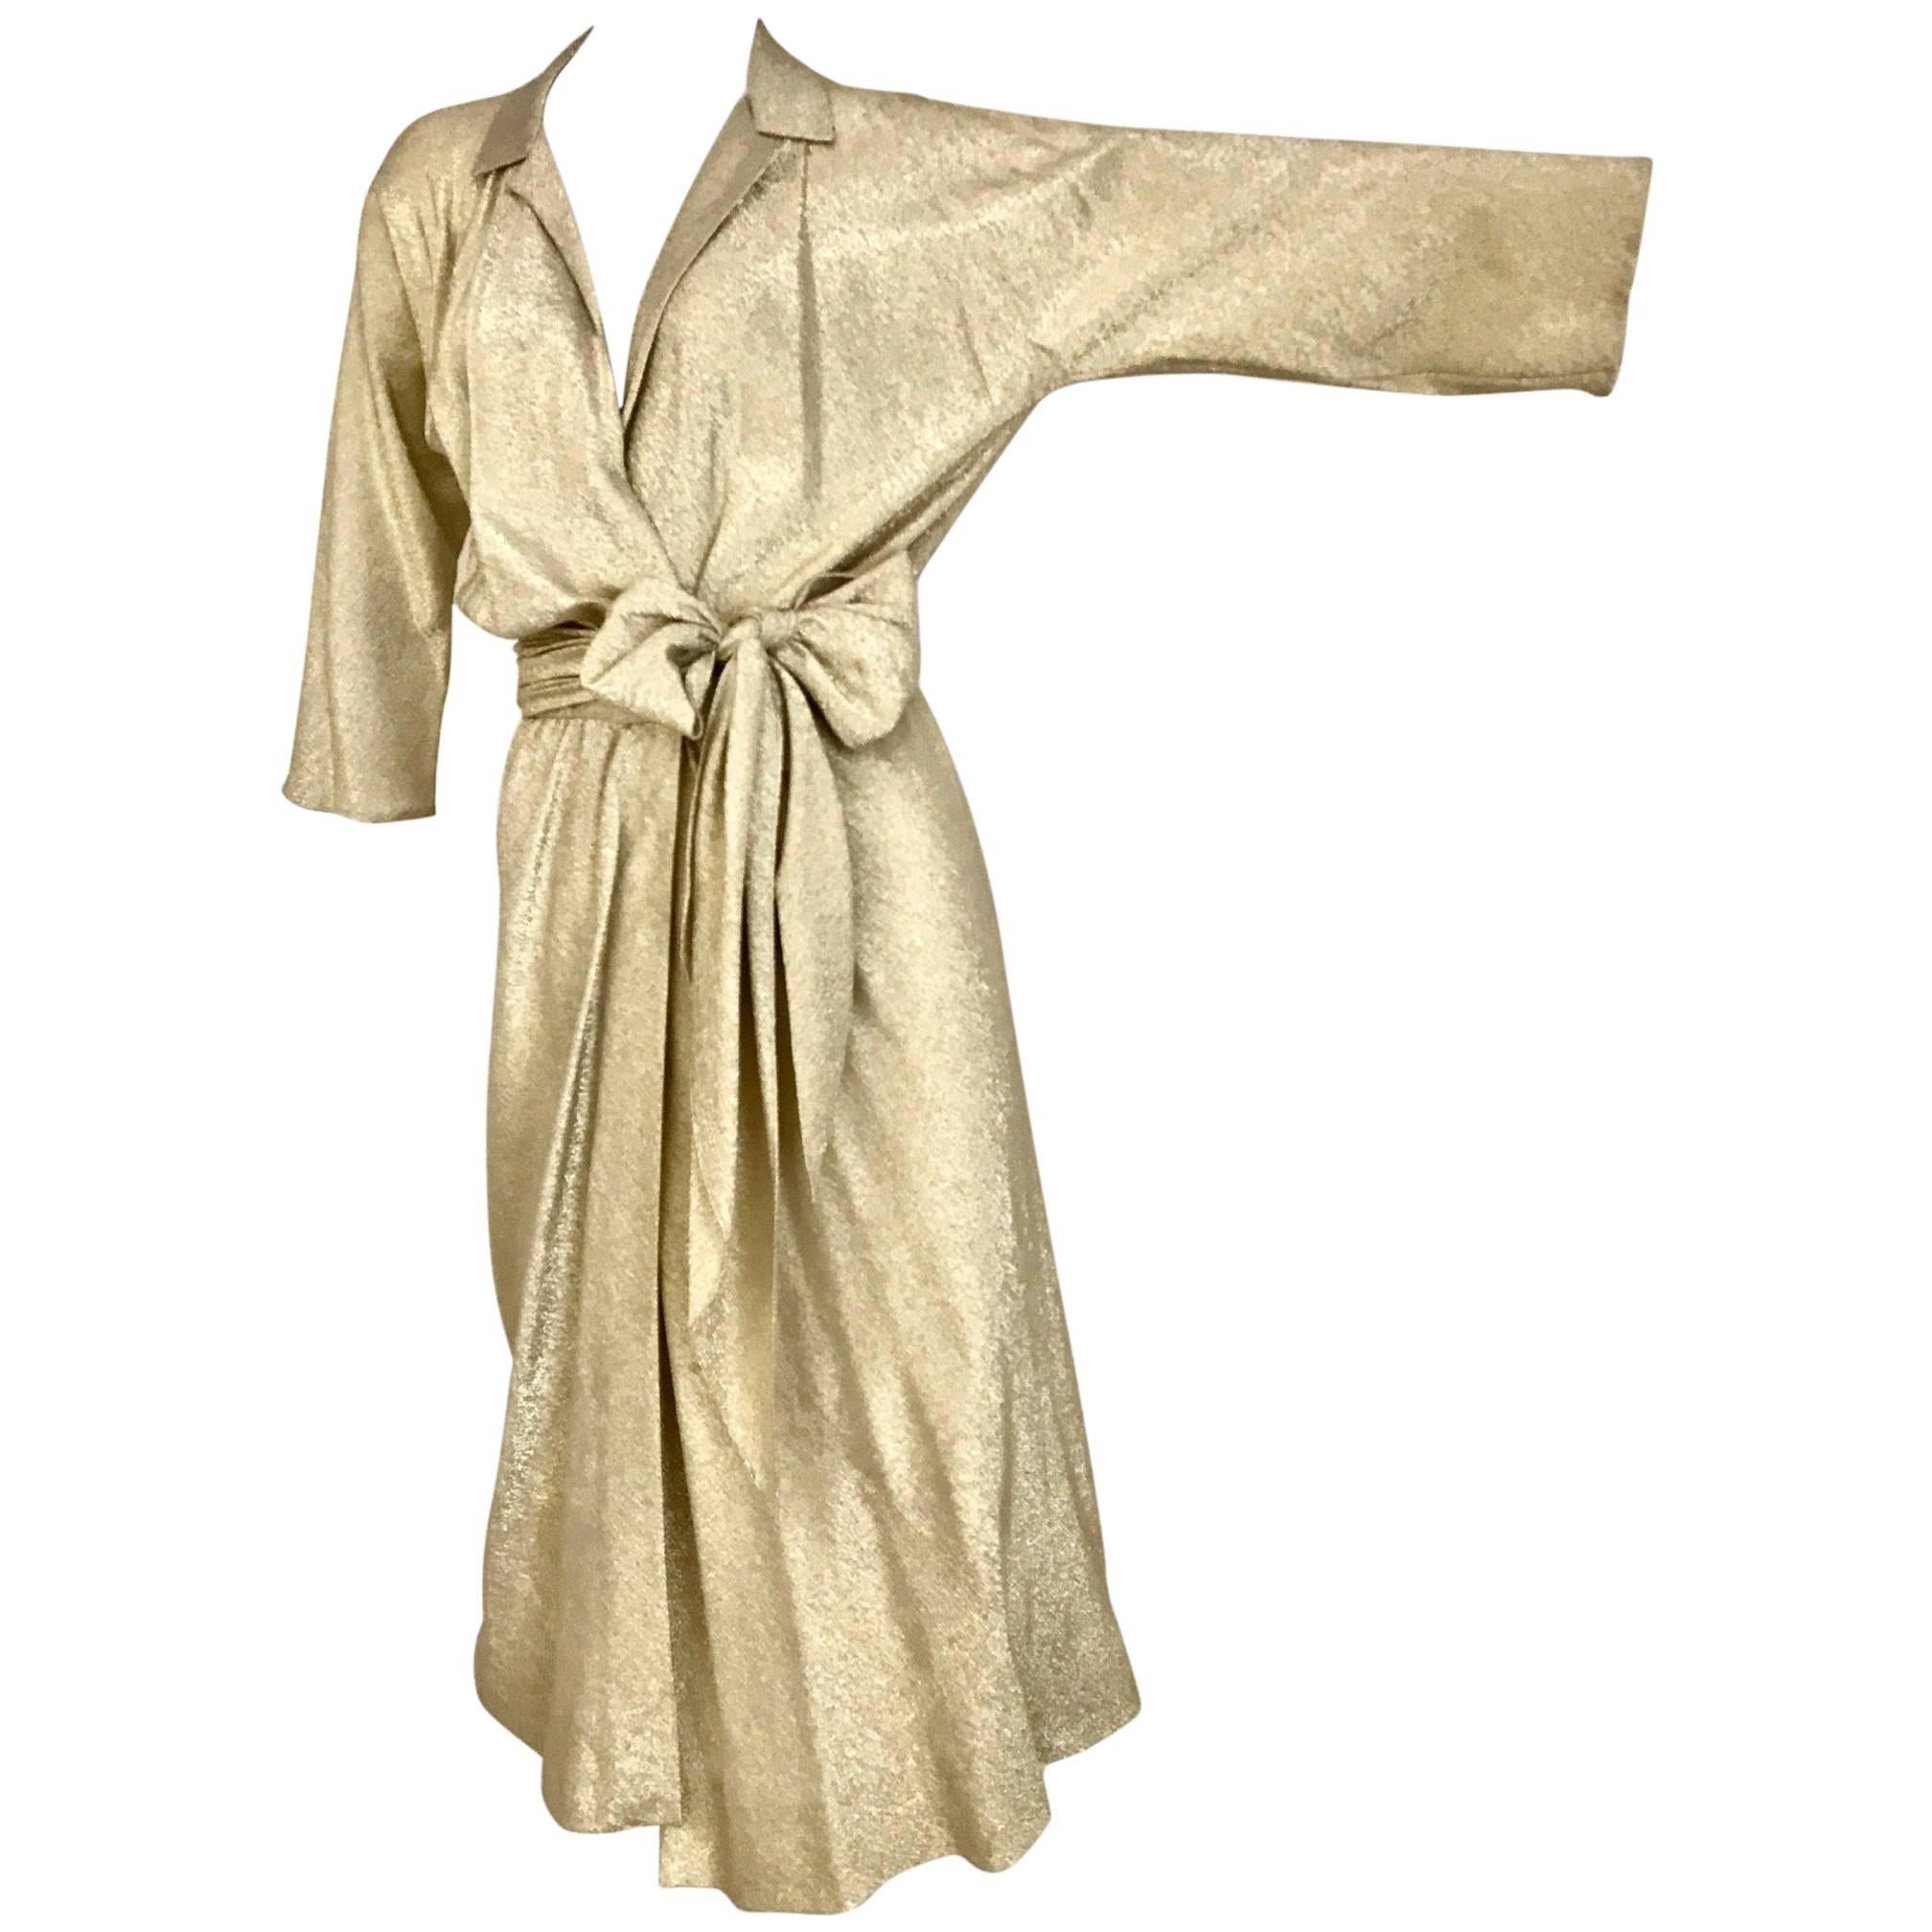 Vintage 1970s HALSTON Gold Metallic Lame 70s Wrap Cocktail Dress